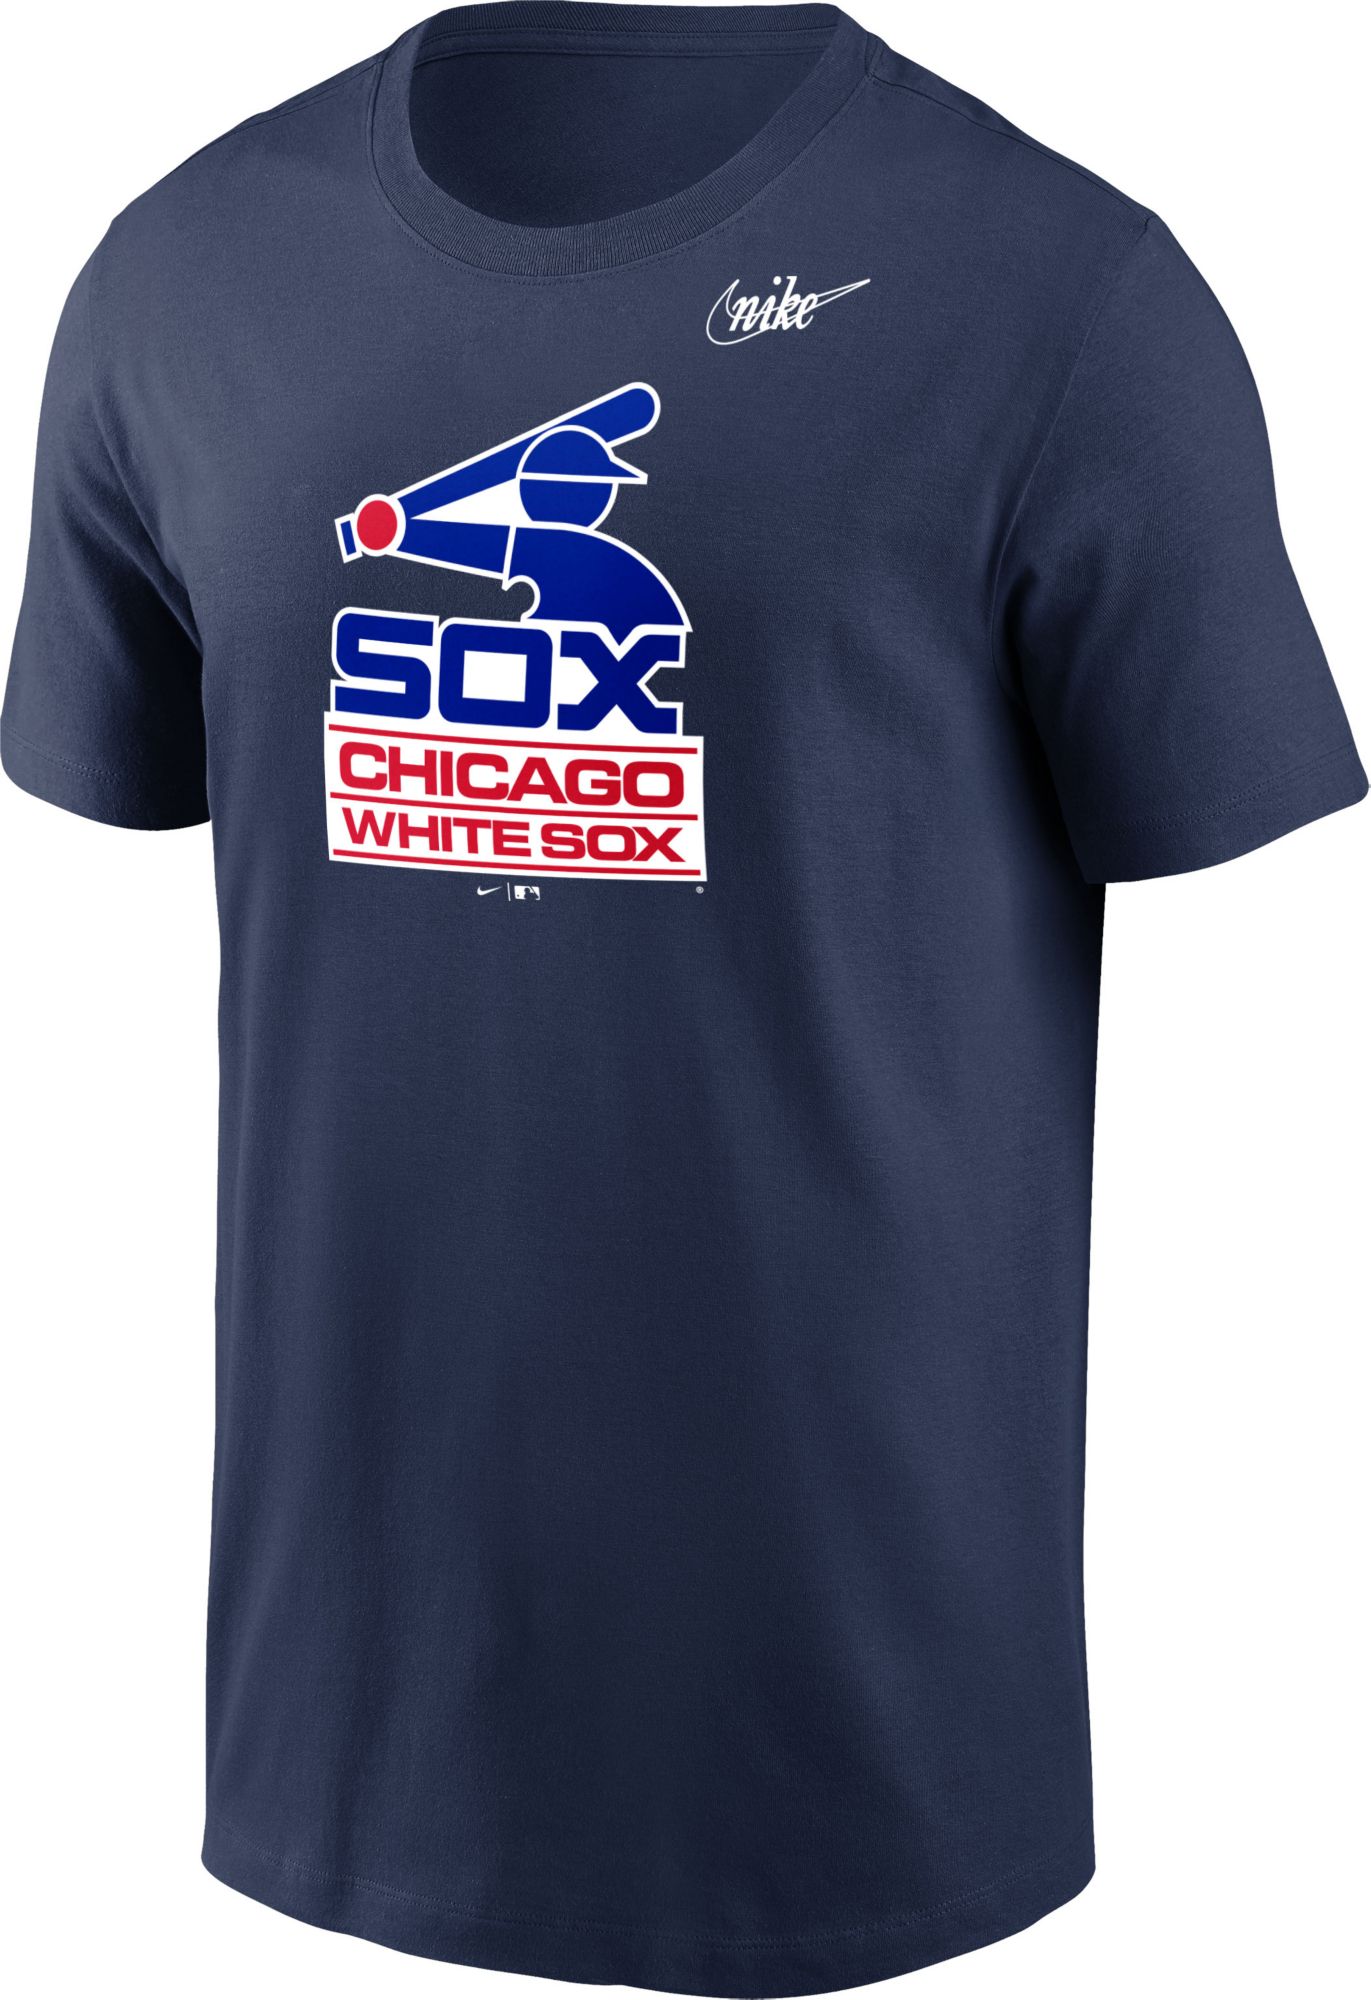 Chicago White Sox Primary Logo Shirt - High-Quality Printed Brand